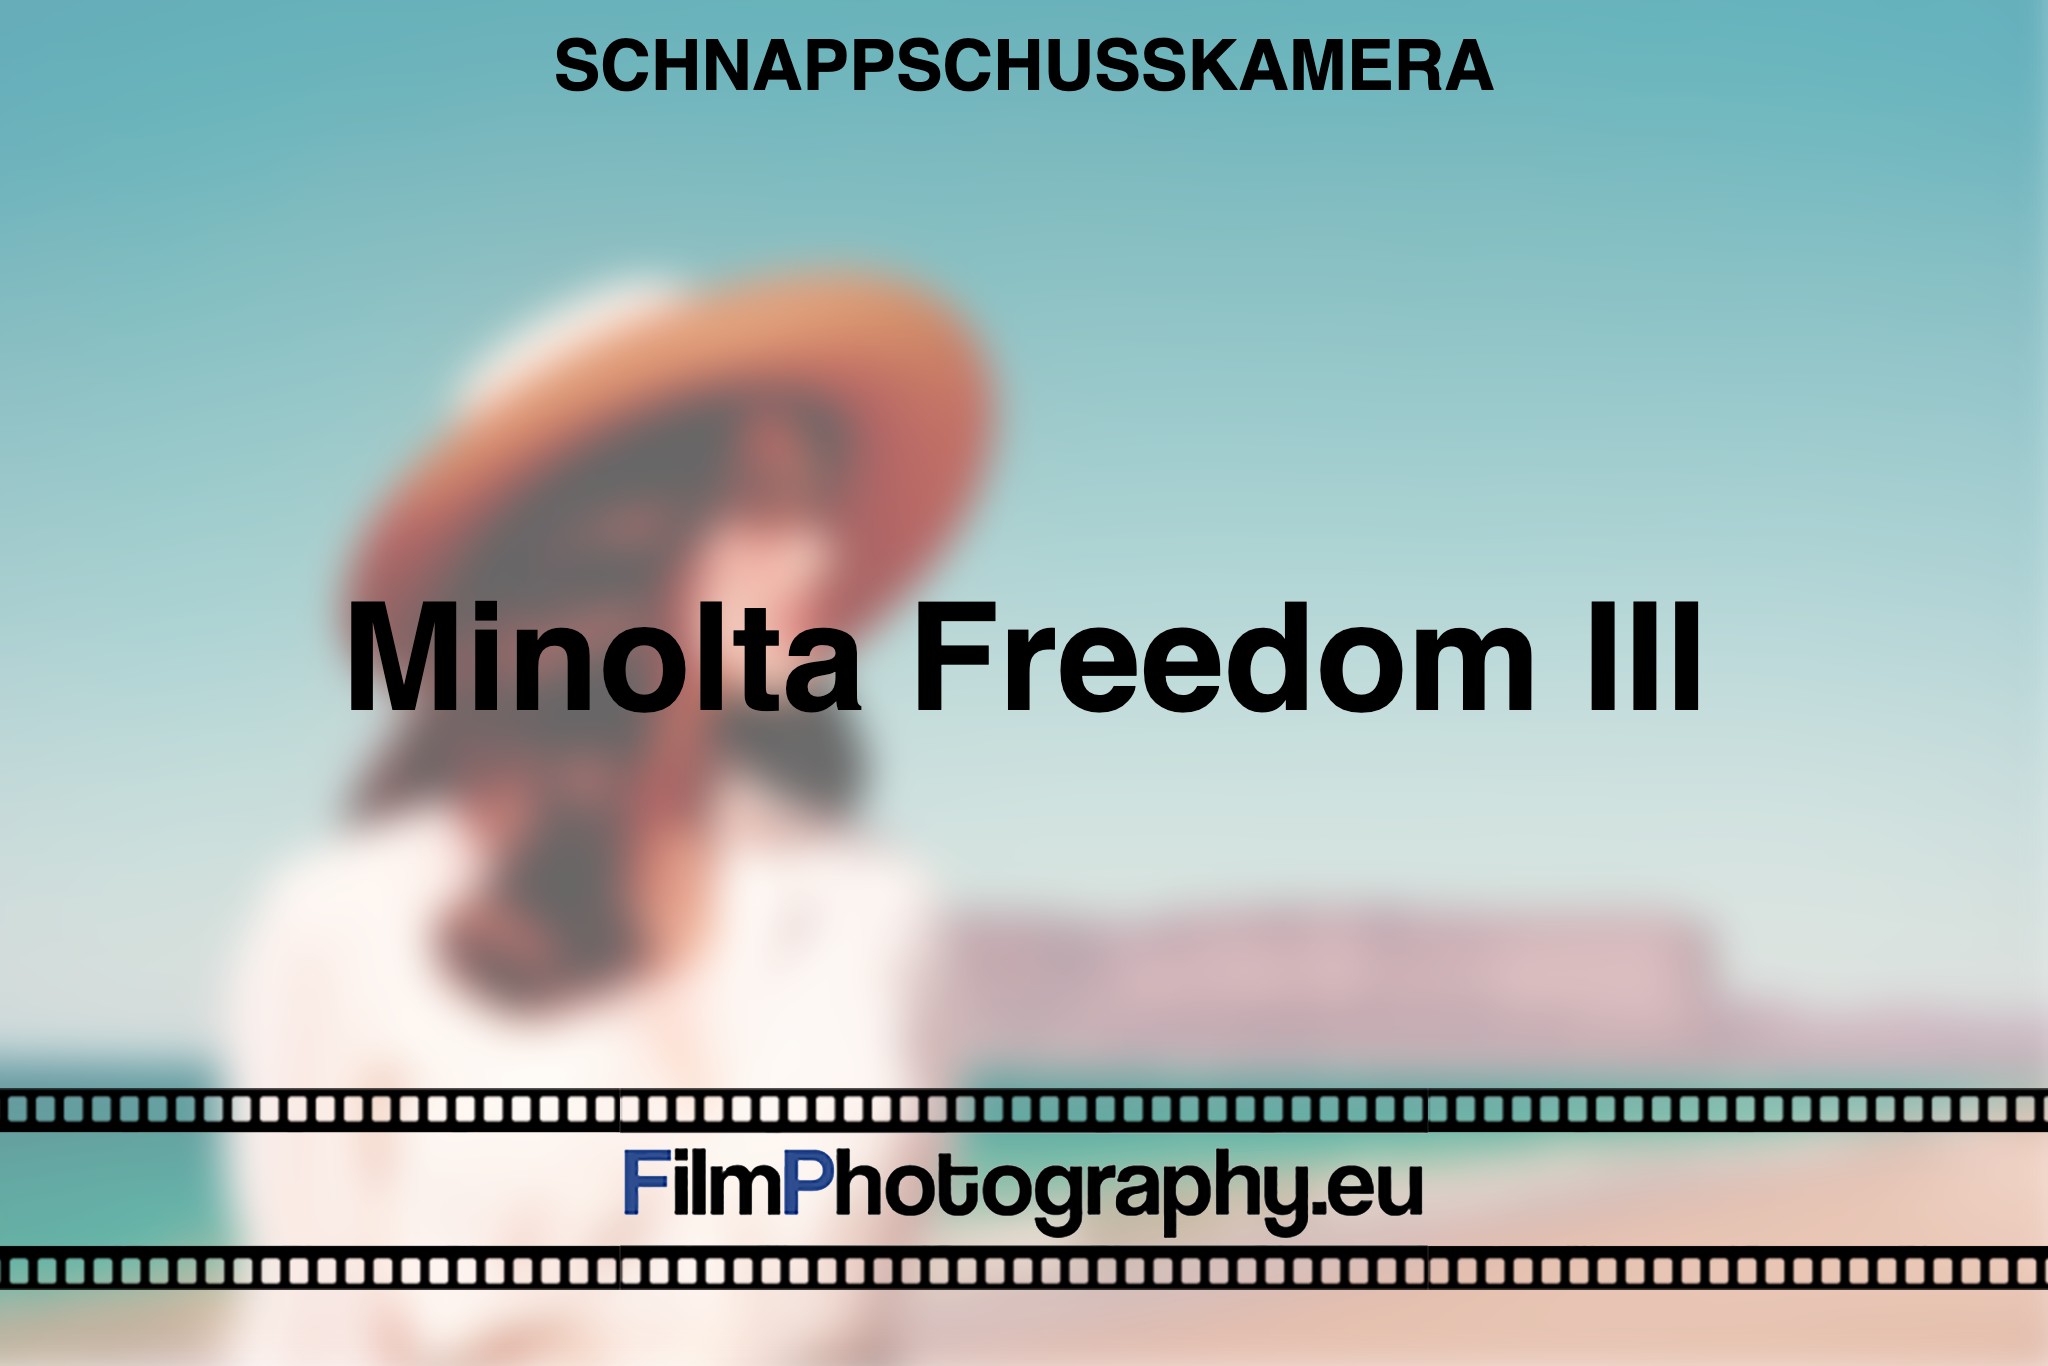 minolta-freedom-iii-schnappschusskamera-bnv